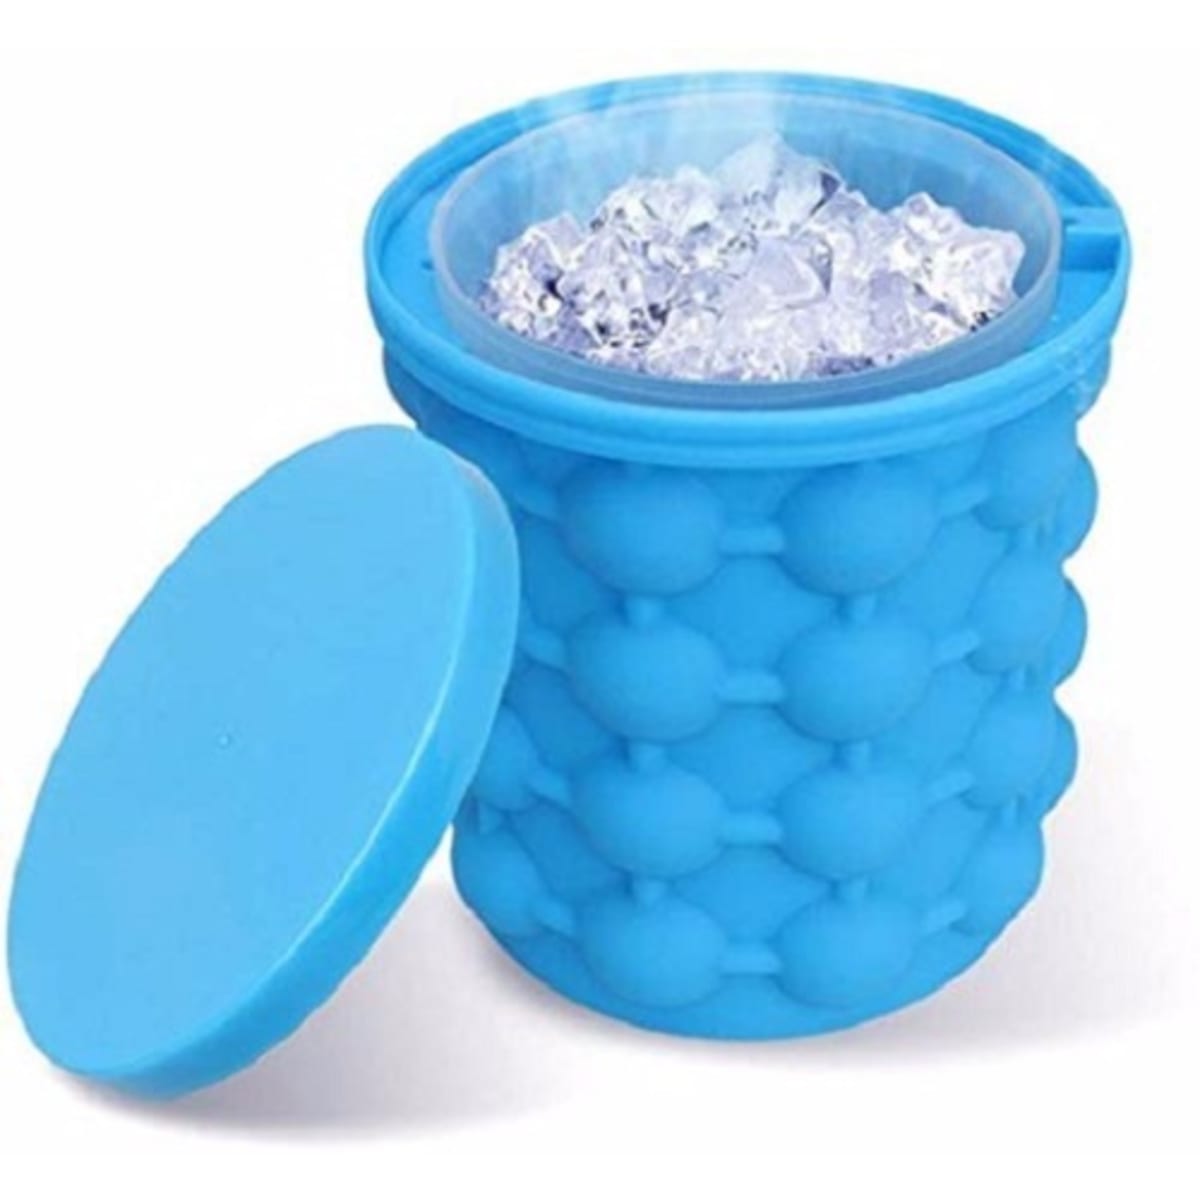 Magic Ice Cube Maker Genie Silicone Rubber Ice Tray Mold